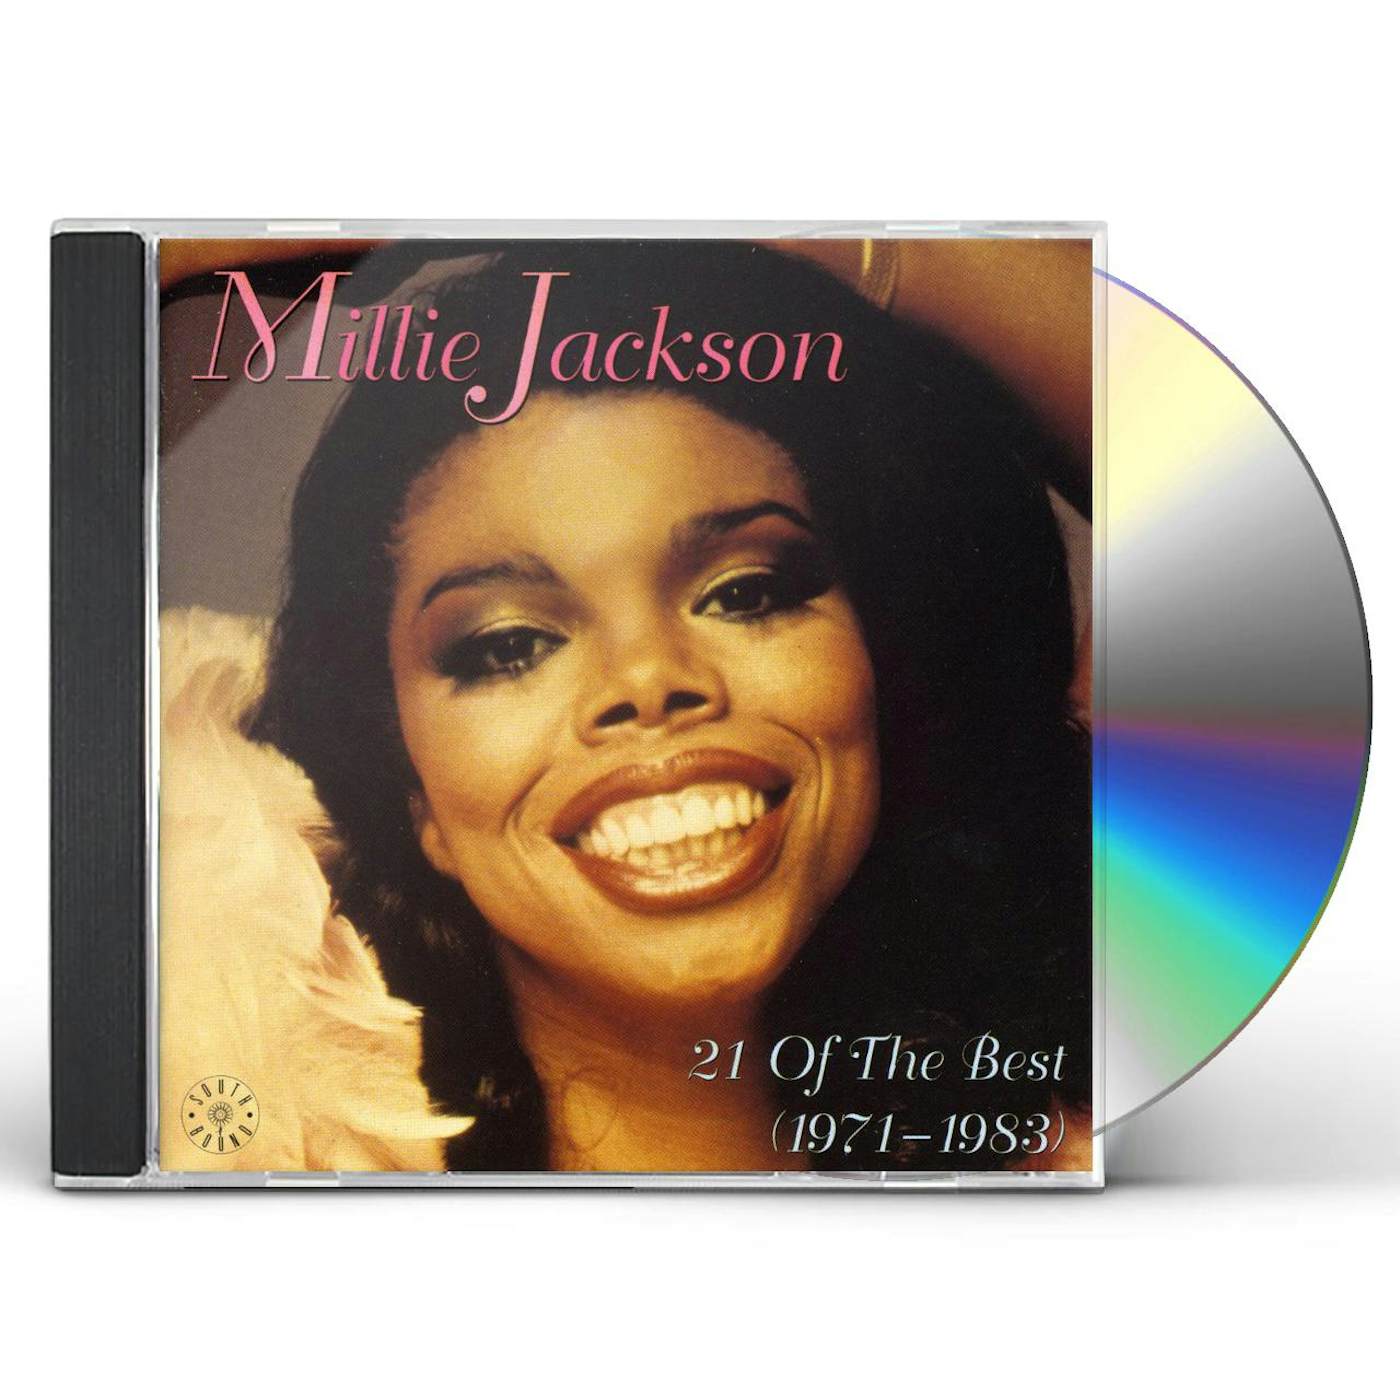 Millie Jackson 21 OF THE BEST CD